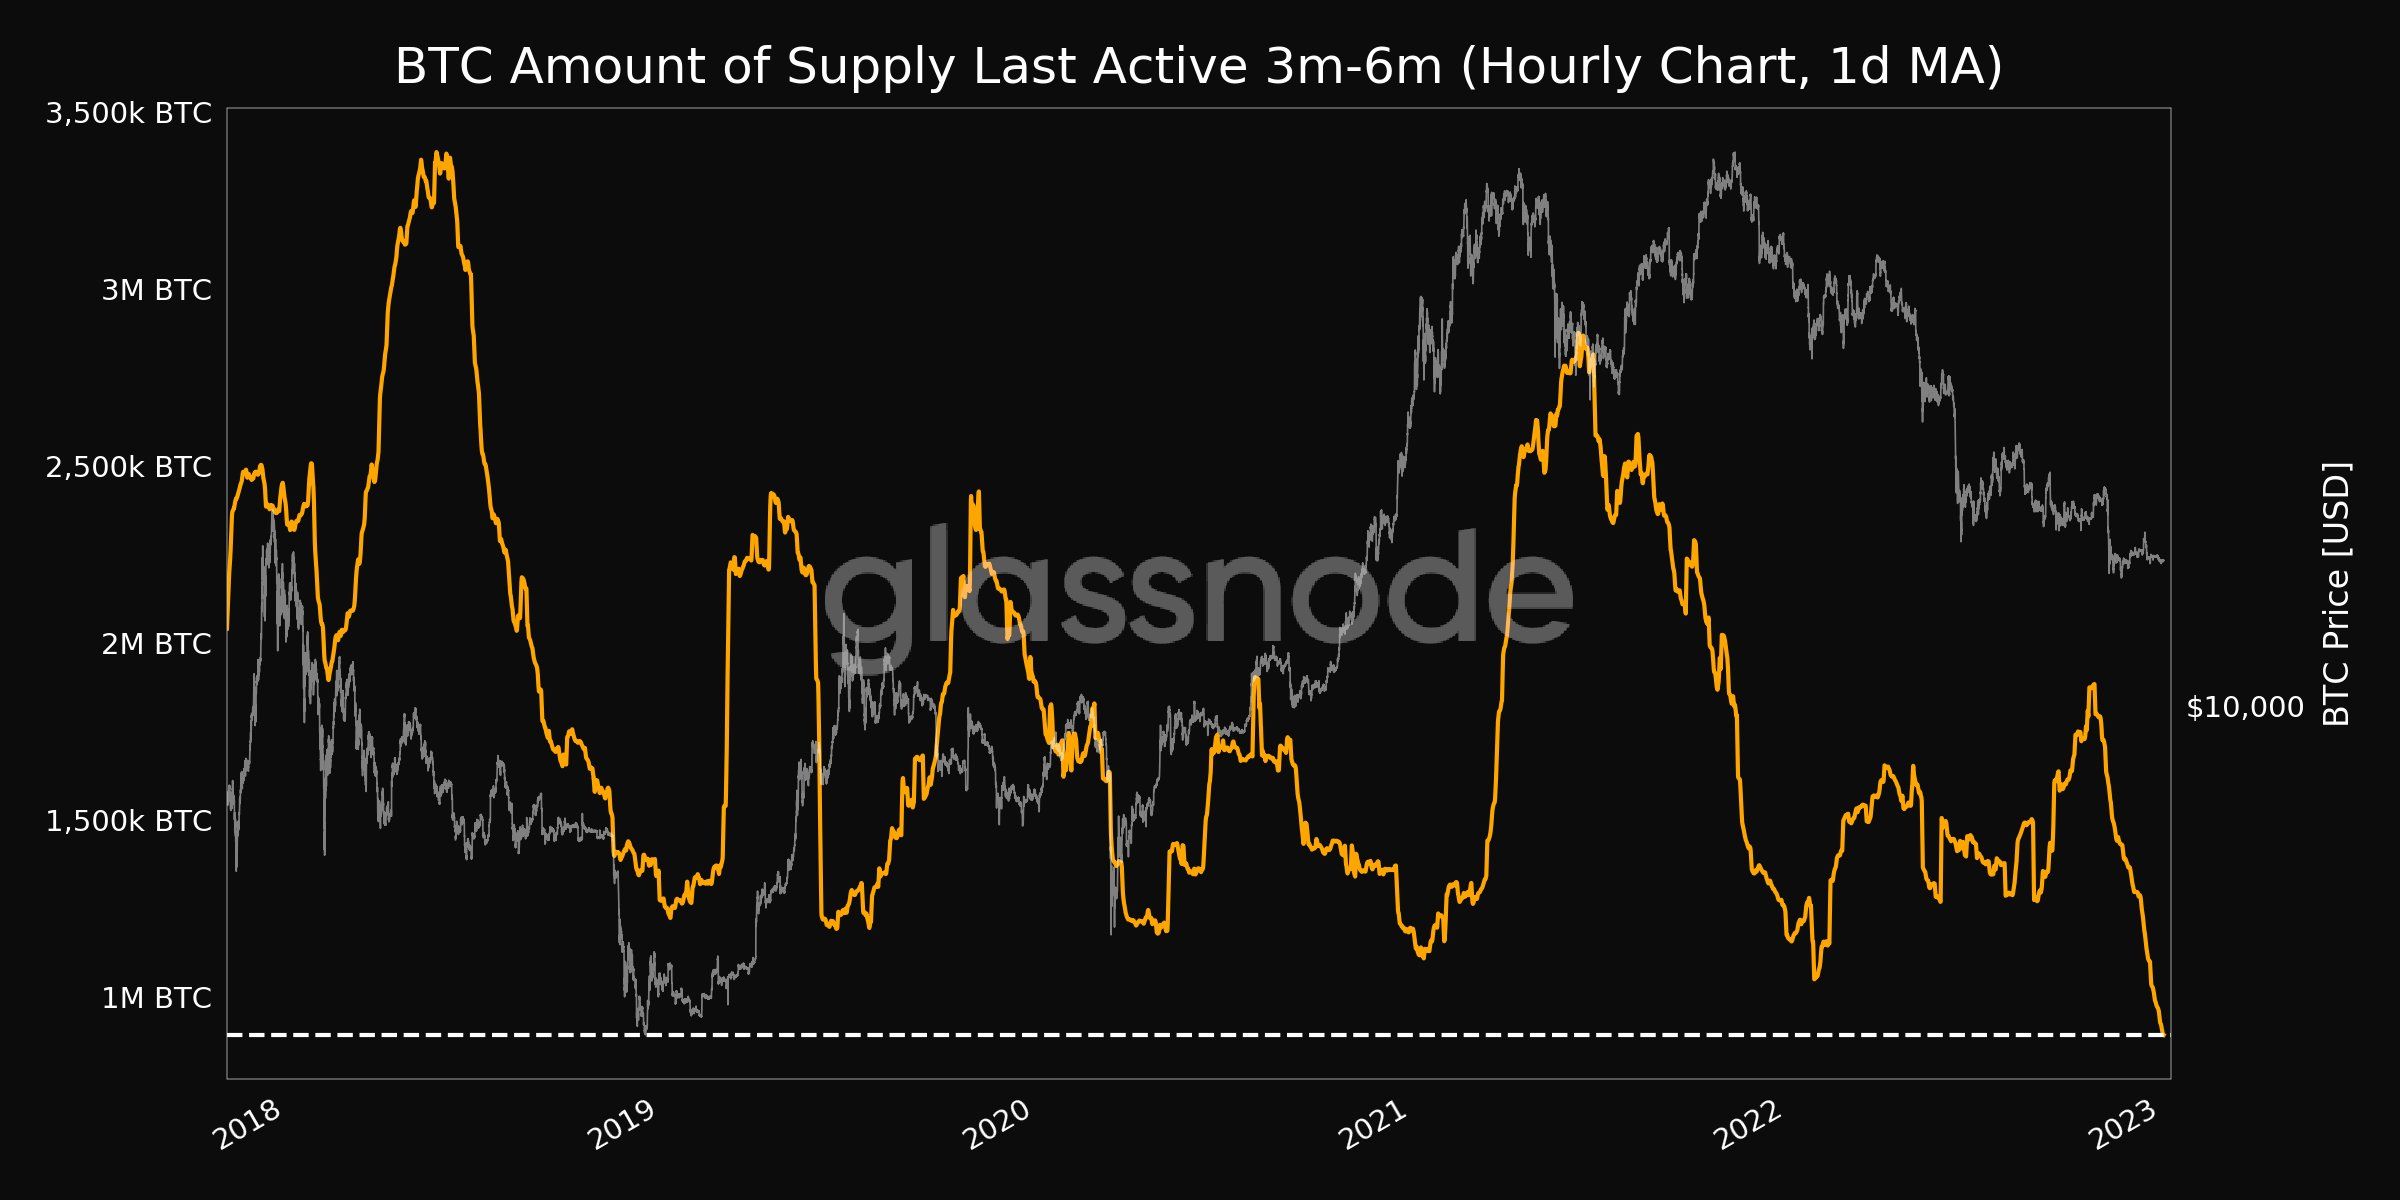 BTC supply last active 3-6 months ago chart. Source - Glassnode [Twitter]